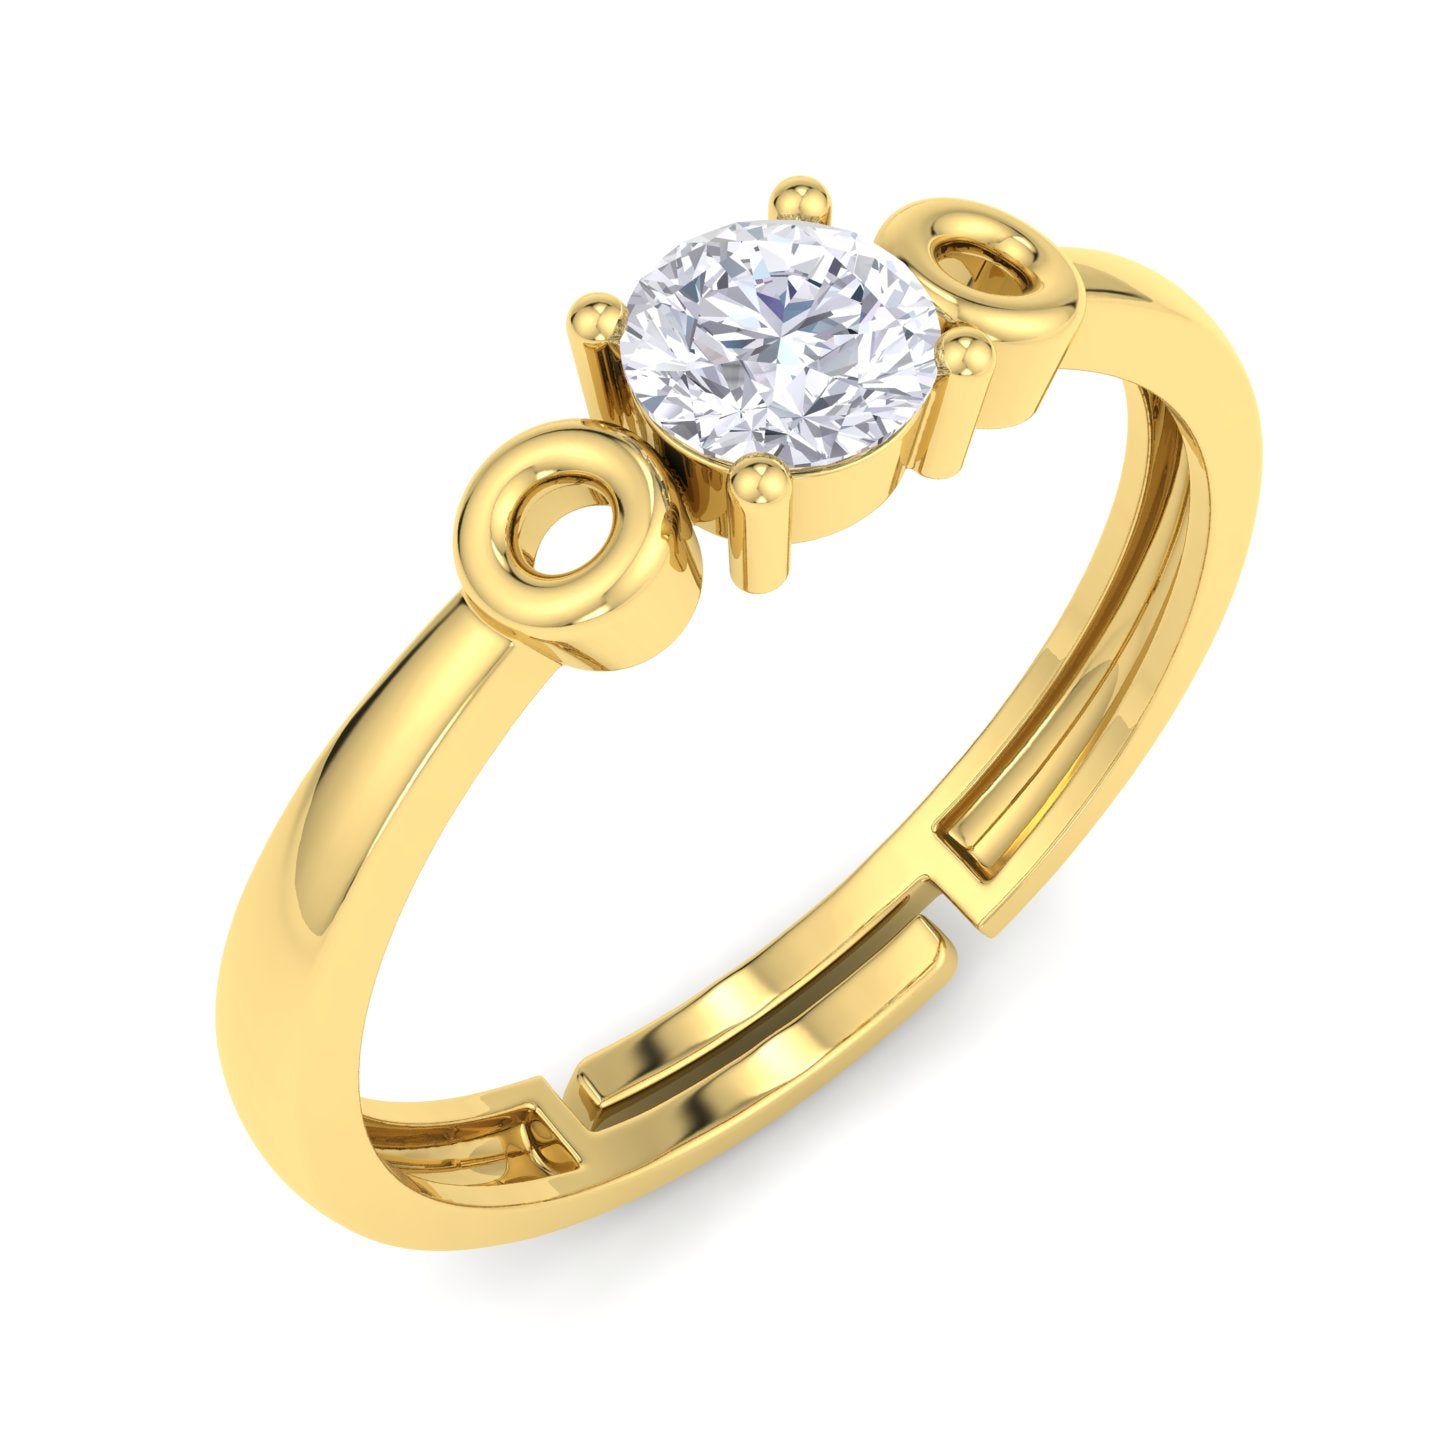 BEEZAL 14KT Elegant Gold Rings with CZ Diamond for Women